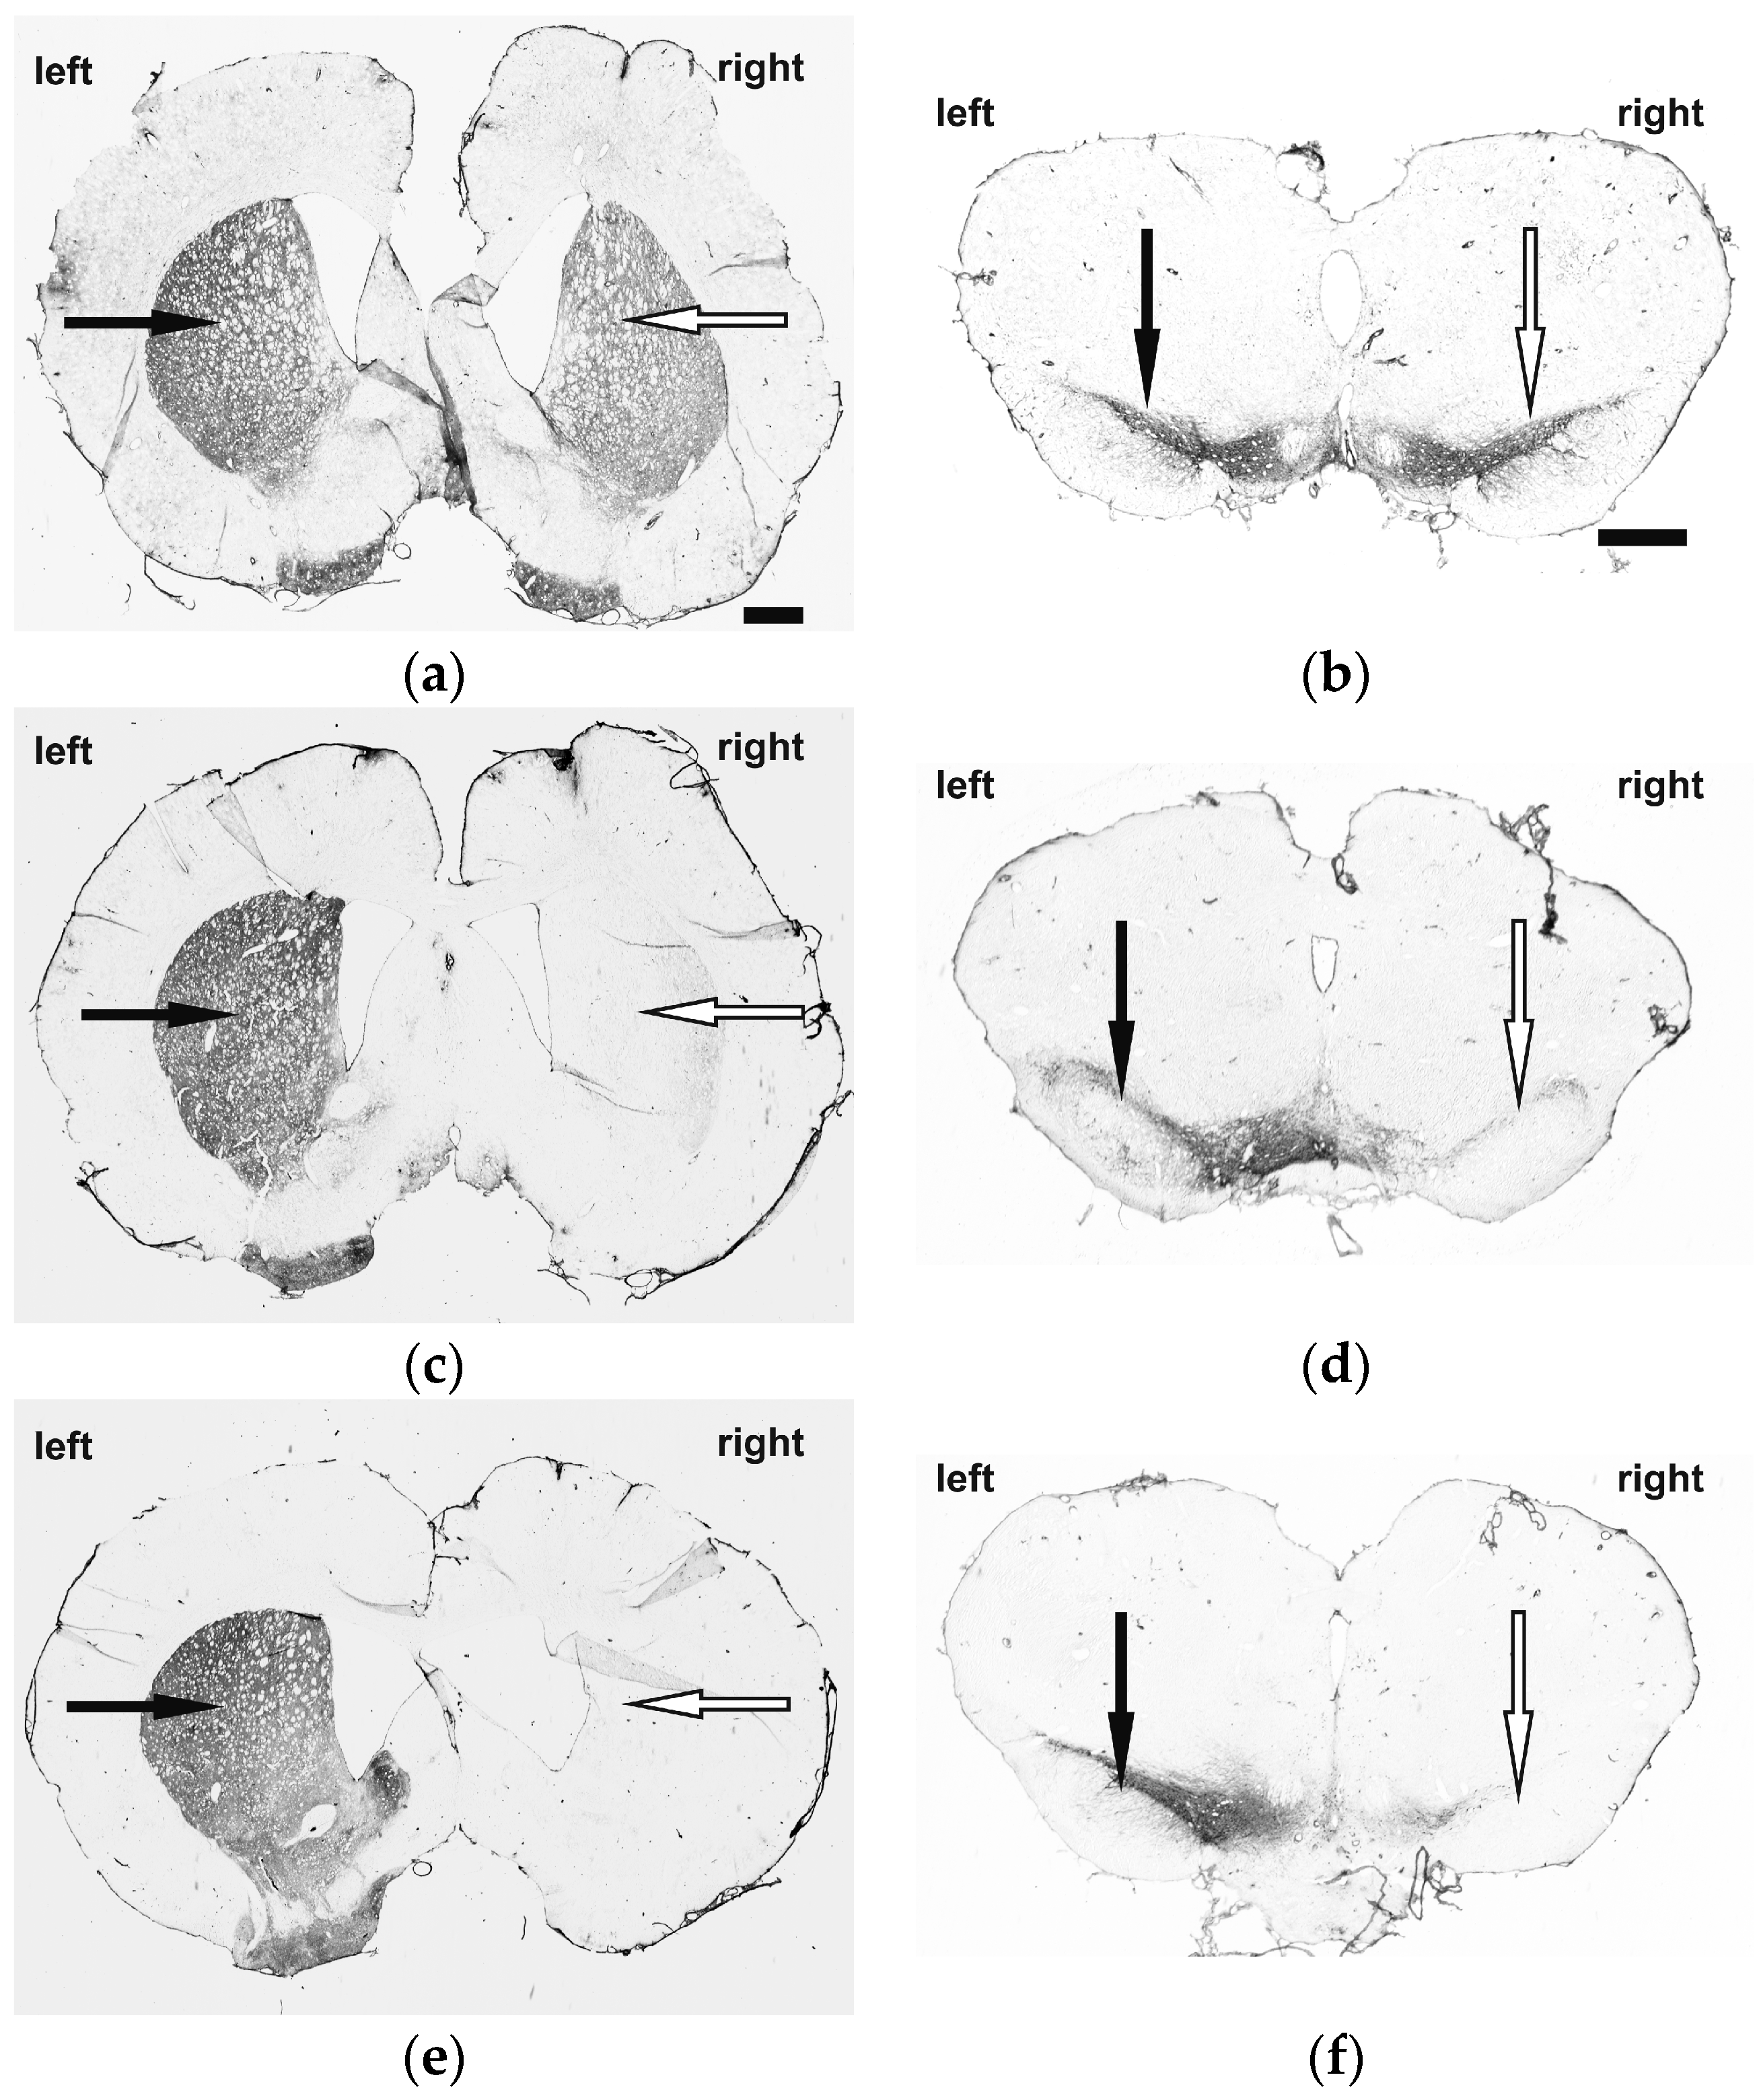 Molecules | Free Full-Text | [18F]fallypride-PET/CT Analysis of the  Dopamine D2/D3 Receptor in the Hemiparkinsonian Rat Brain Following  Intrastriatal Botulinum Neurotoxin A Injection | HTML